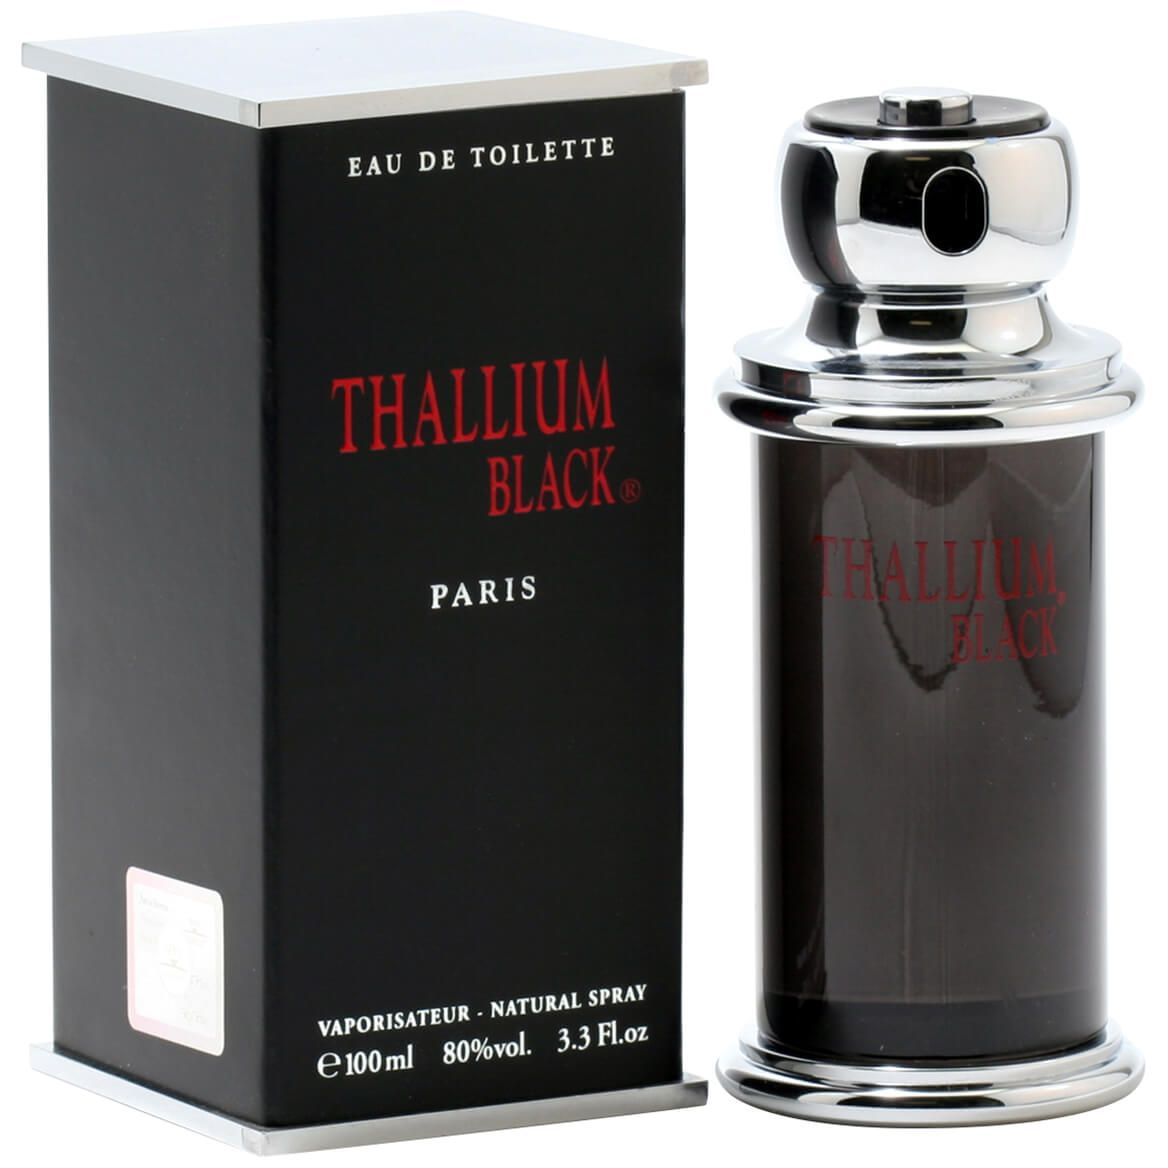 Jacques Evard Thallium Black for Men EDT, 3.3 oz. + '-' + 366850